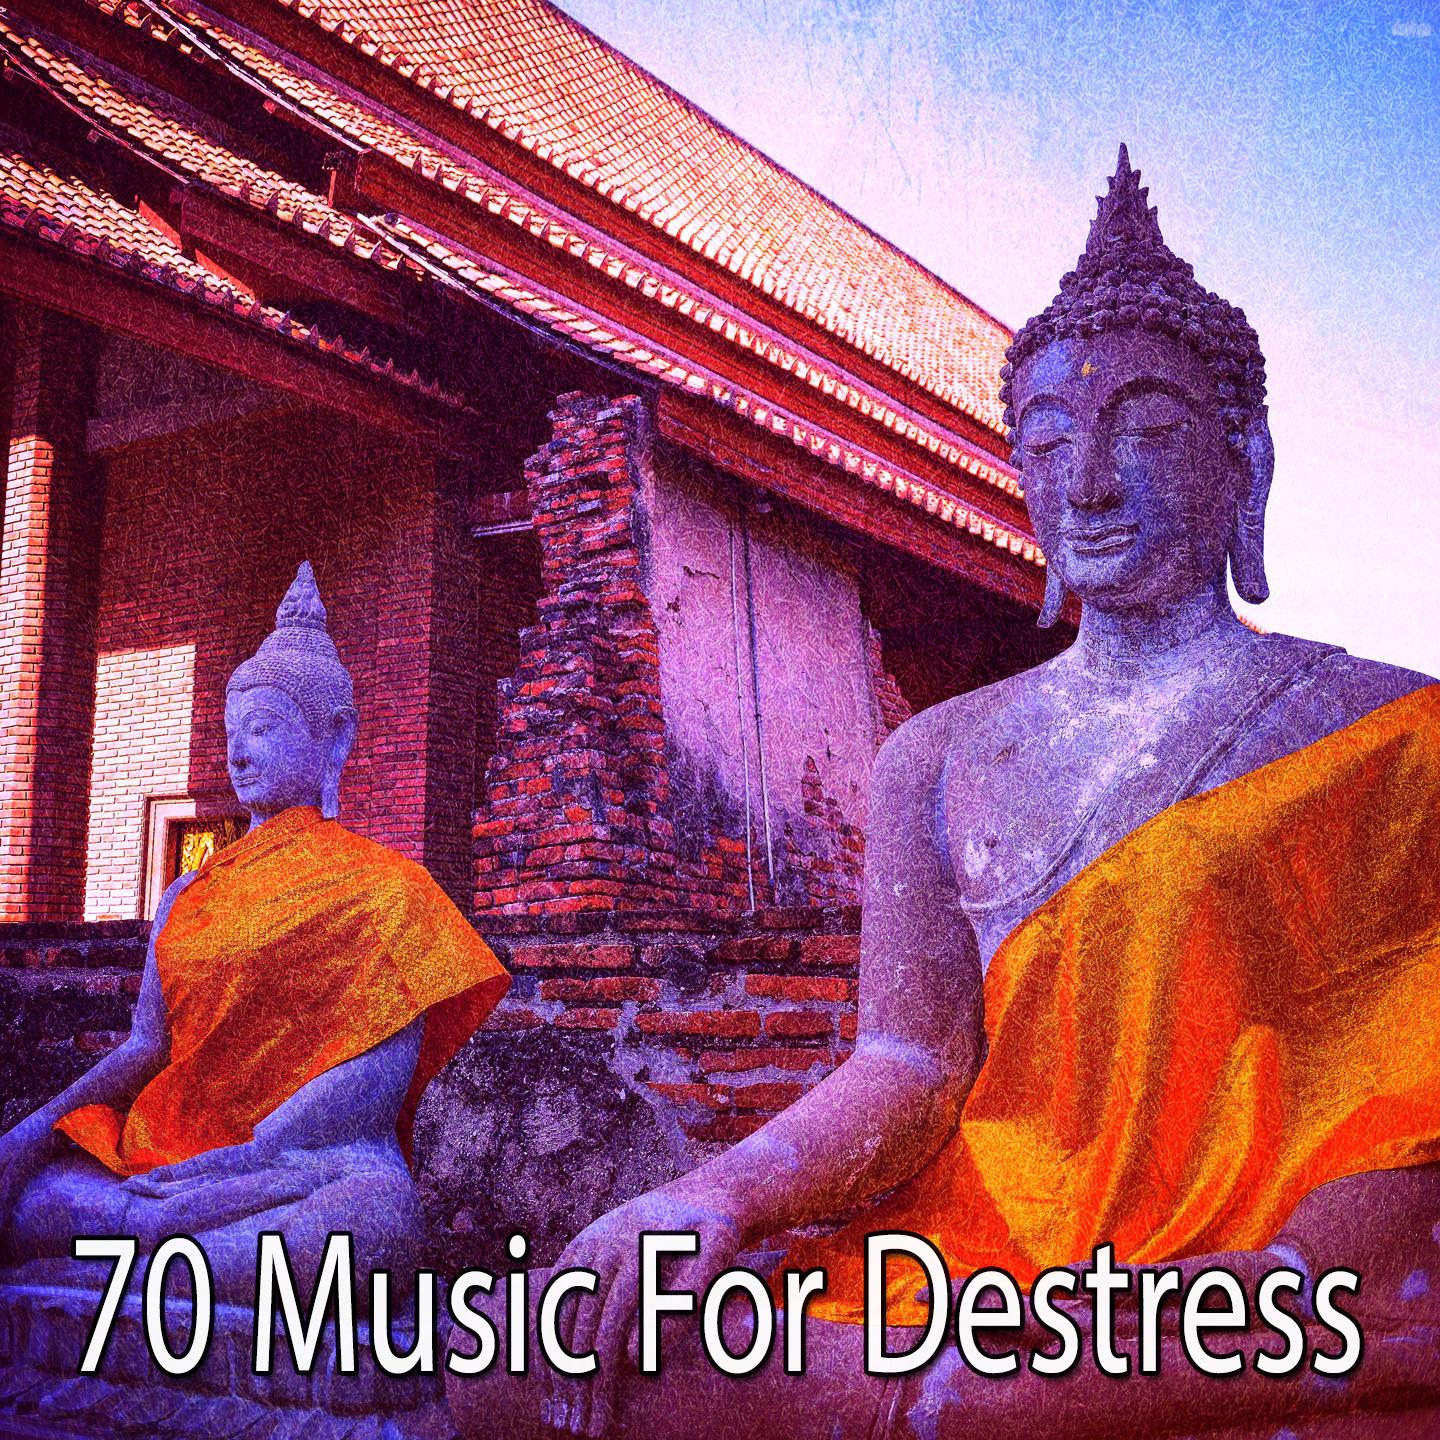 70 Music for Destress